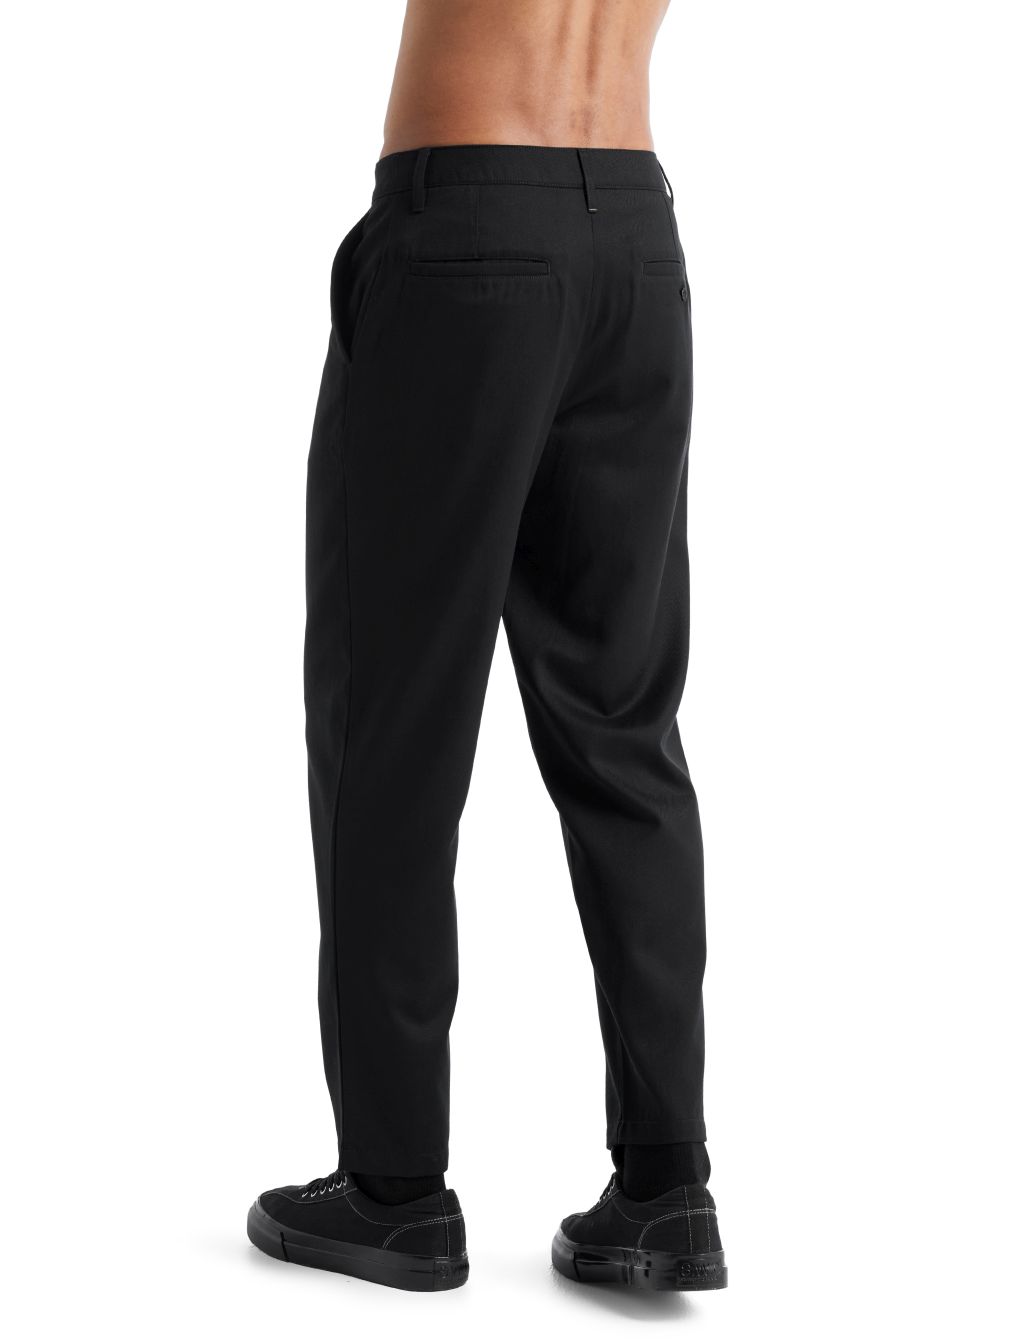 Pánské merino kalhoty ICEBREAKER Mens Berlin Pants, Black velikost: 36